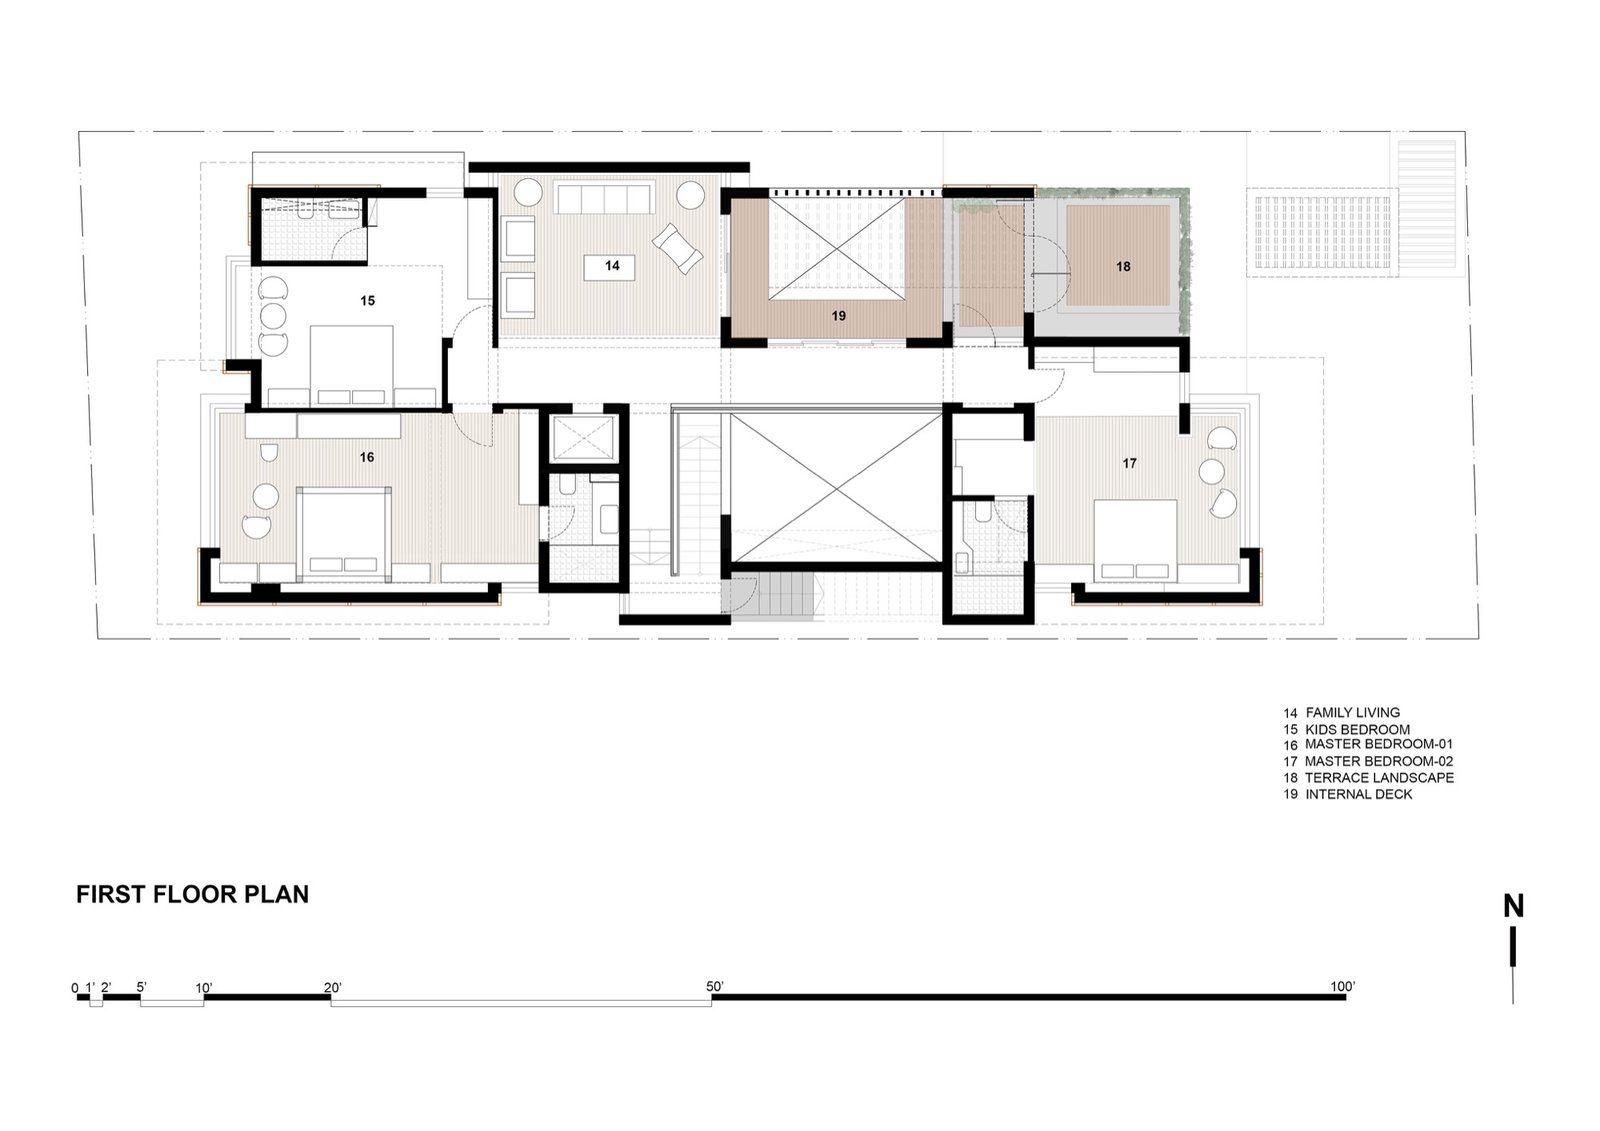 04 First floor plan